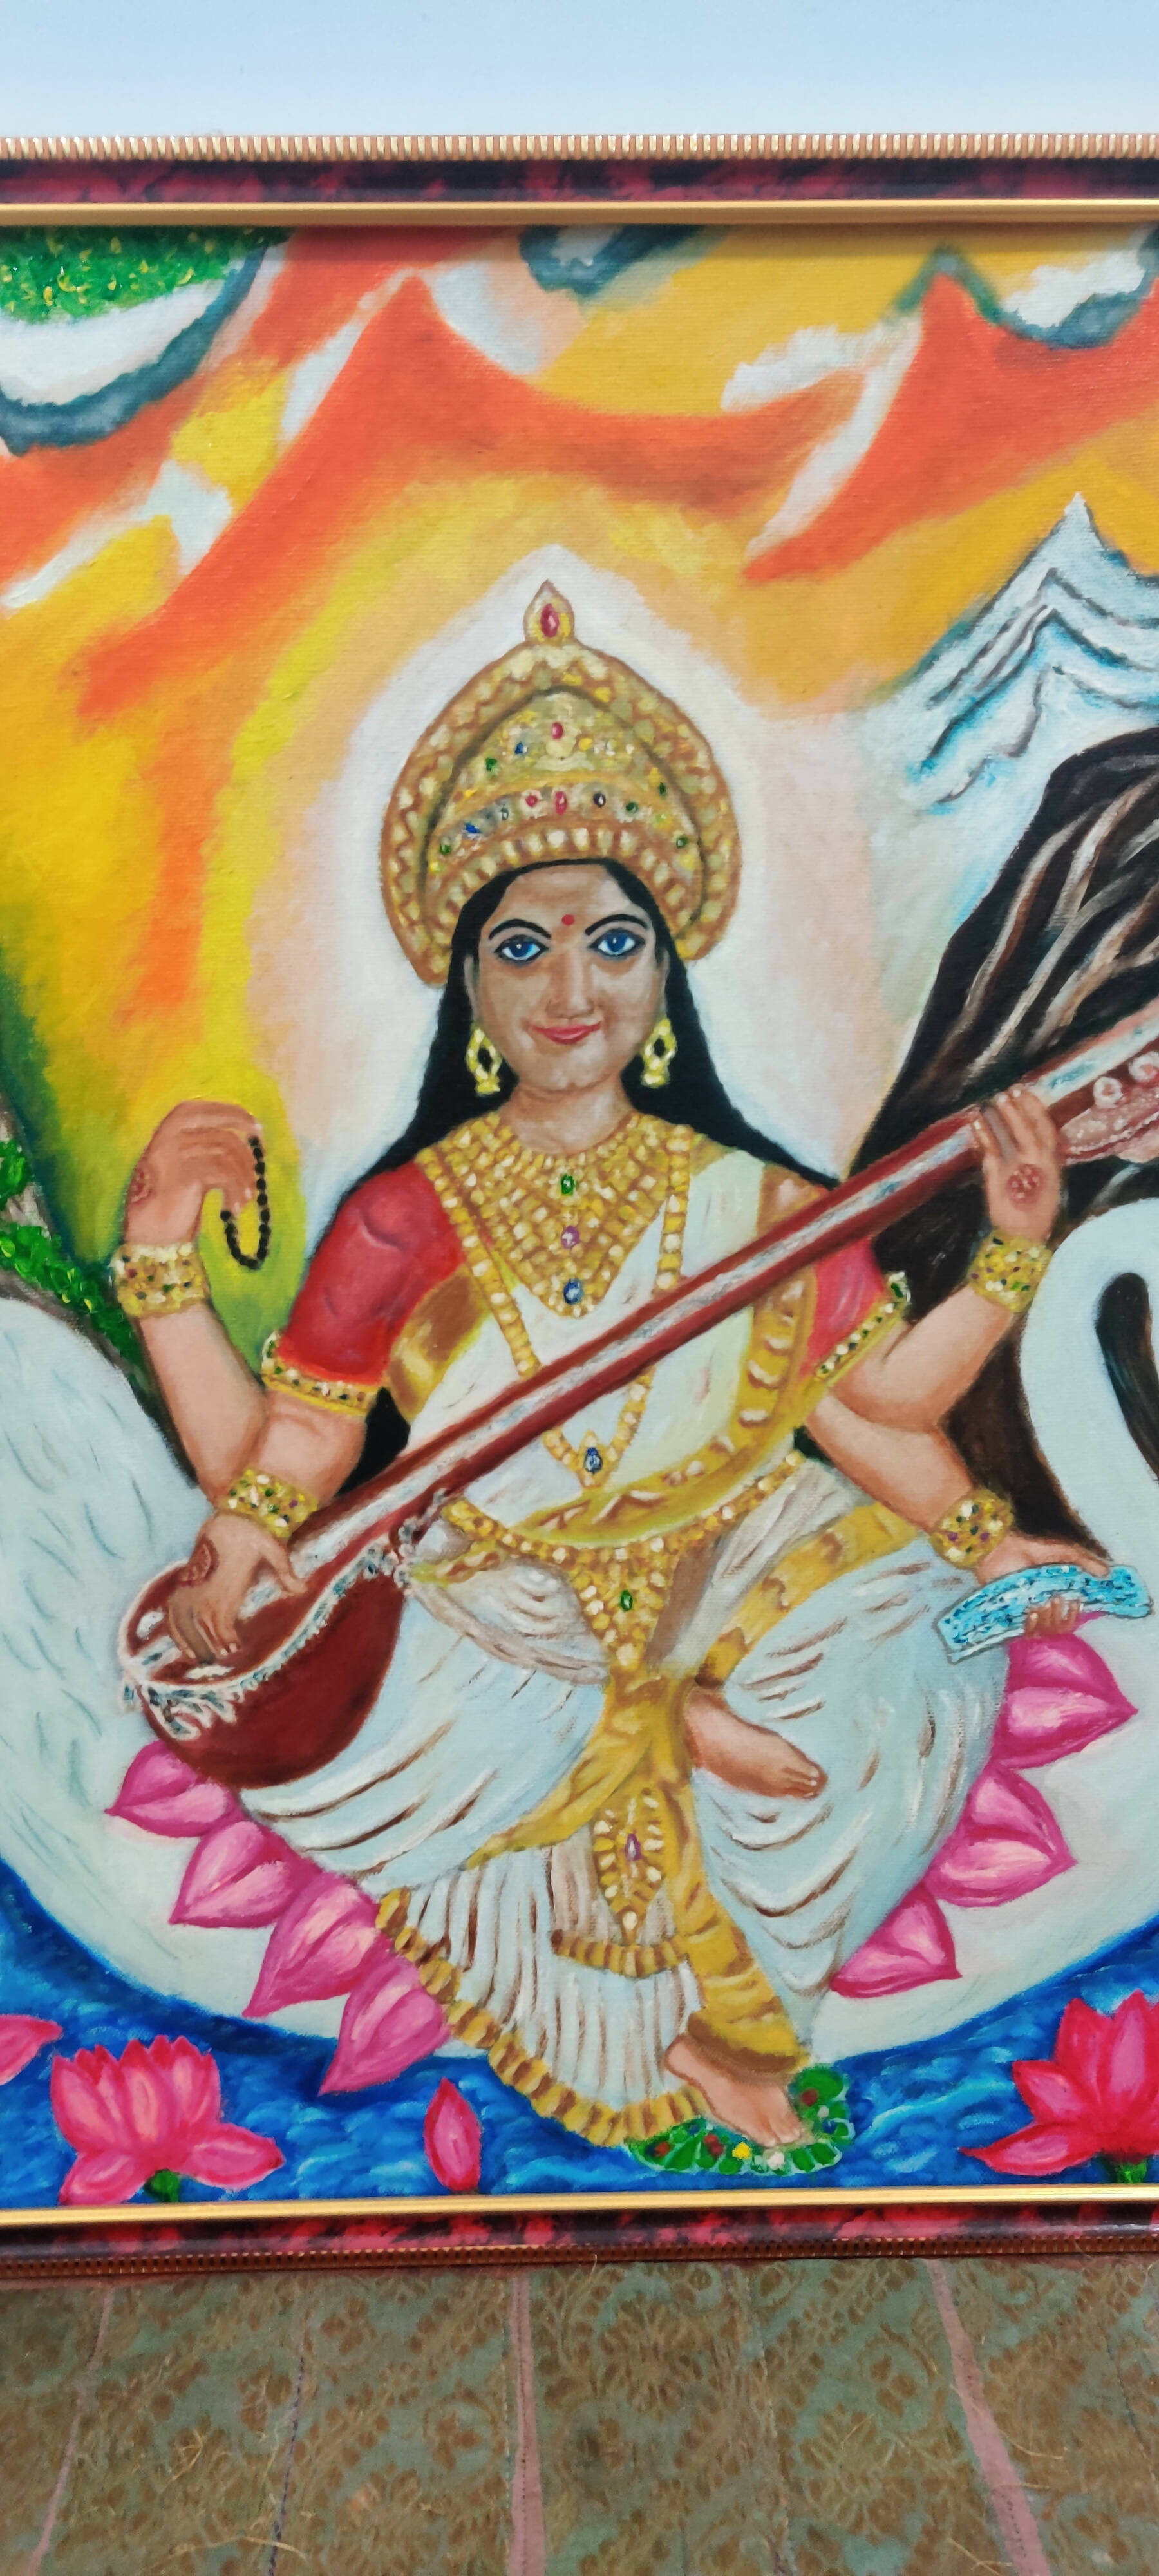 Swarupa at on LinkedIn: Maa Saraswati's sketch